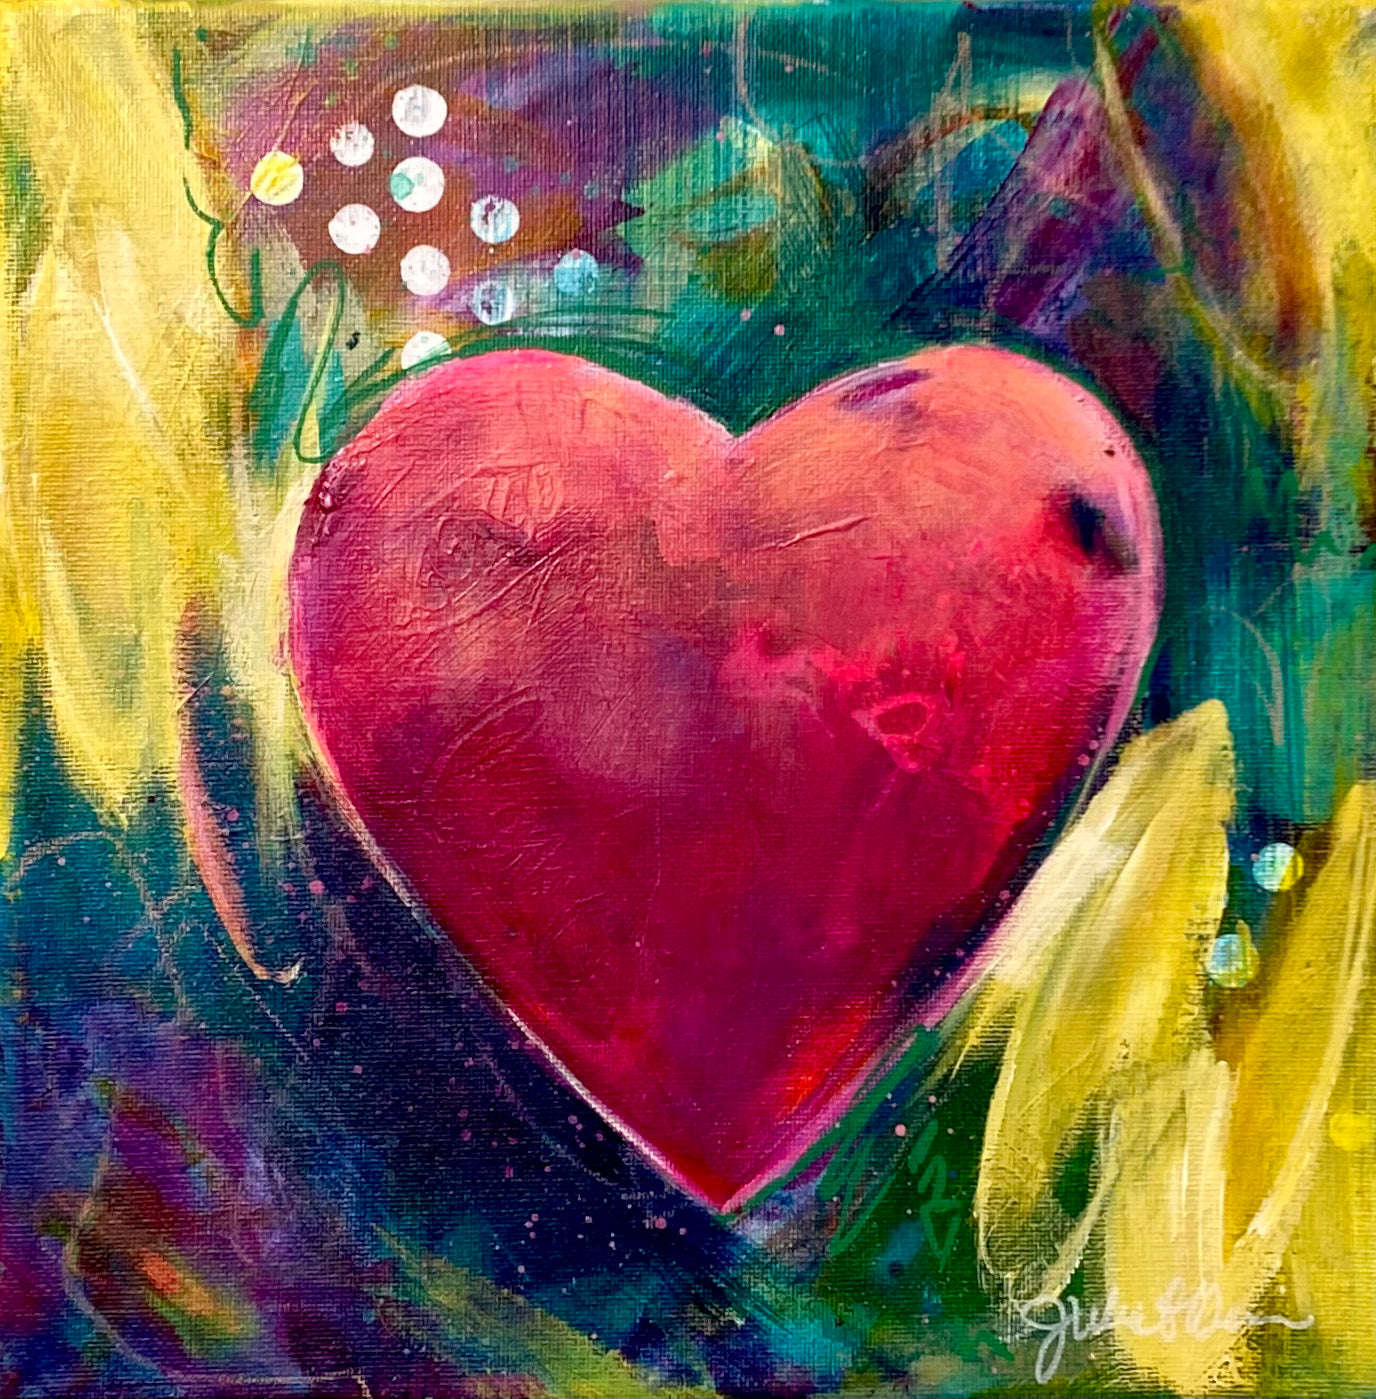 Follow Your Heart No. 3" 11x11" Original on Canvas